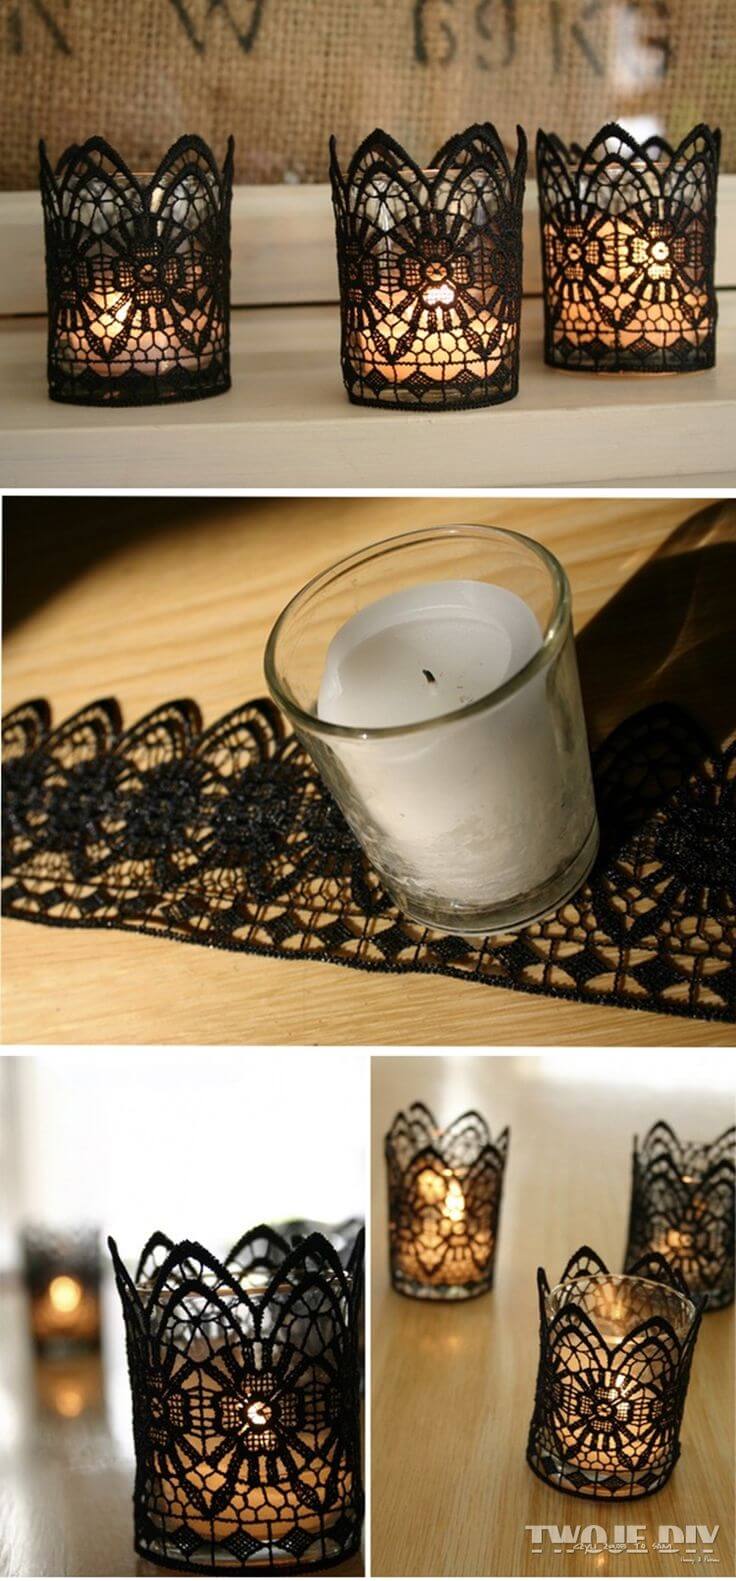 07 diy candle holder ideas homebnc.jpg